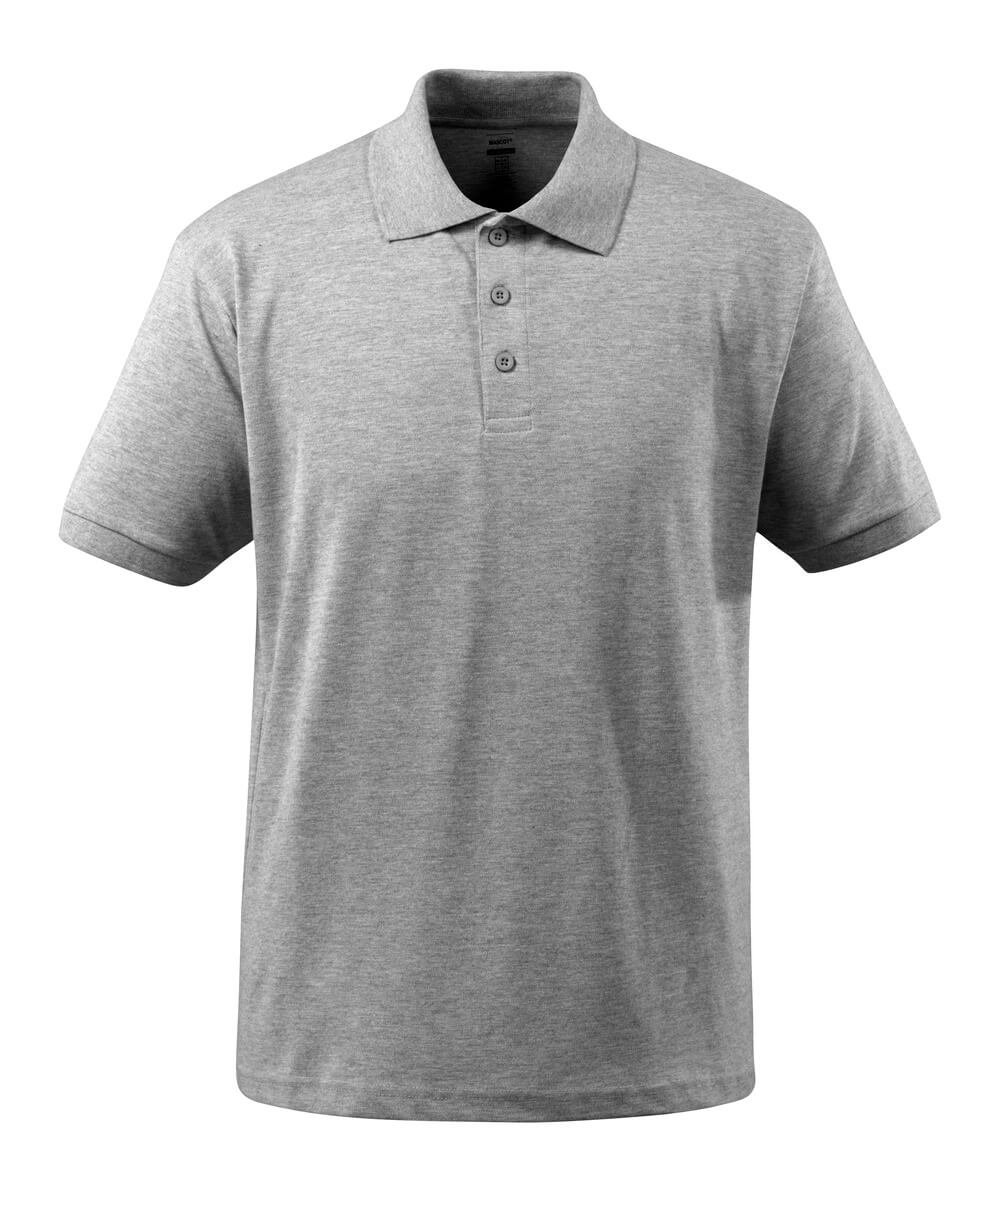 Mascot CROSSOVER  Bandol Polo shirt 51587 grey-flecked